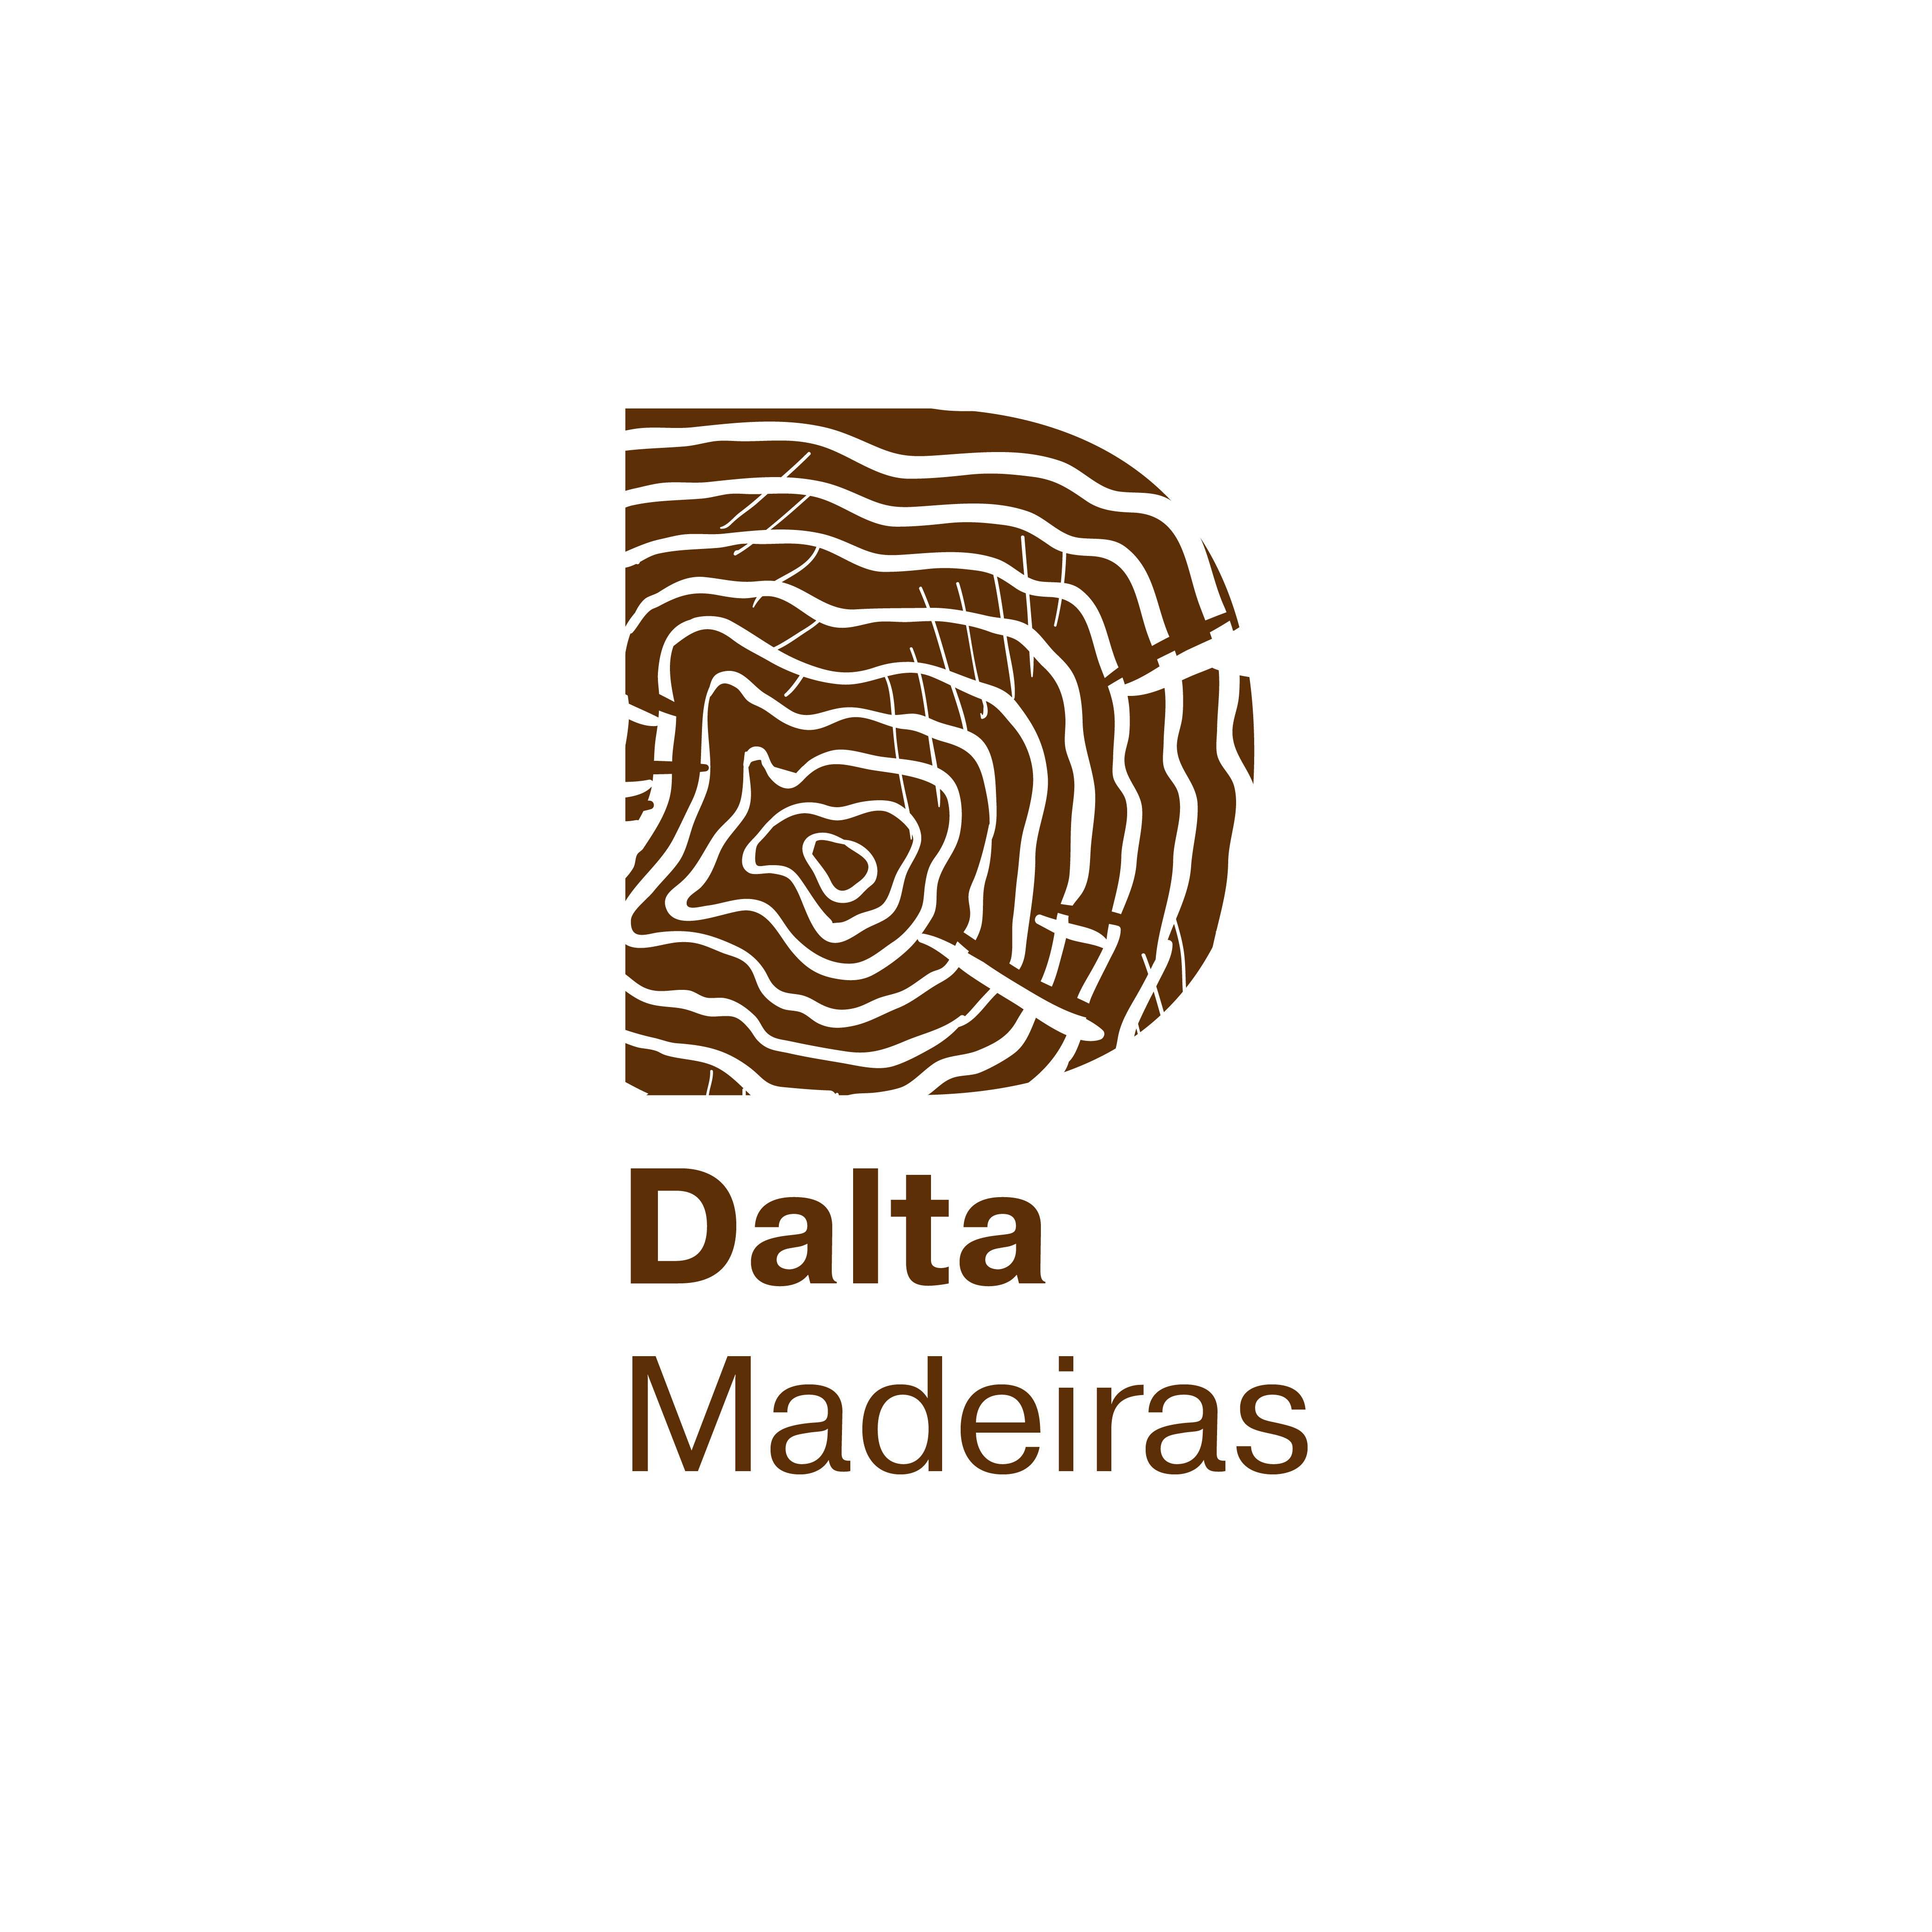 Dalta Madeiras